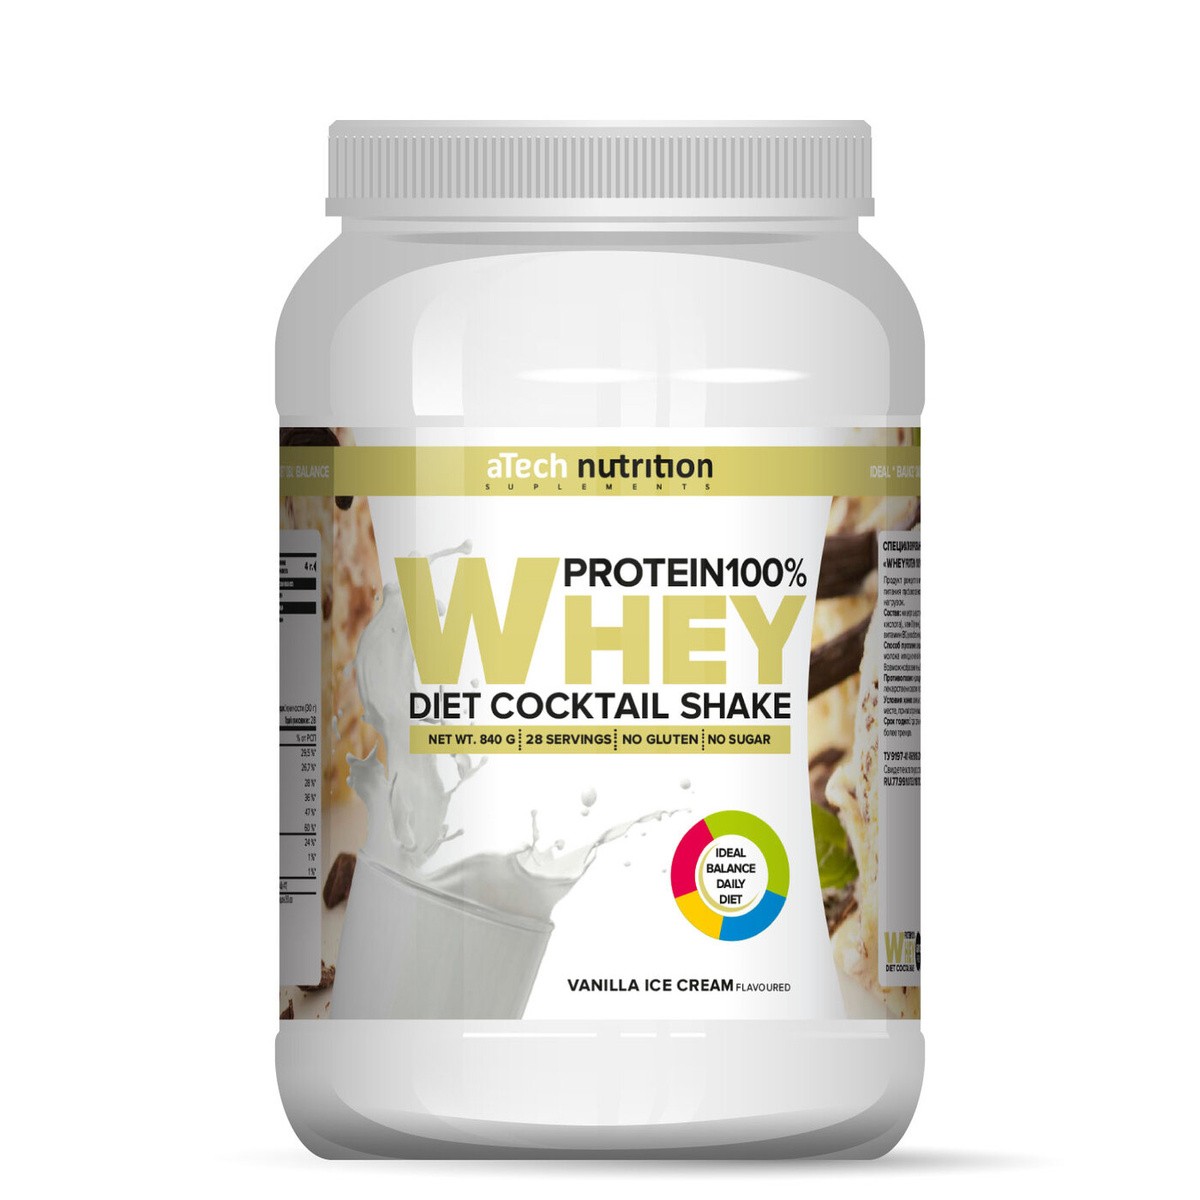 Протеин Whey Protein 100%, aTech Nutrition 840 гр.,ванильное мороженое